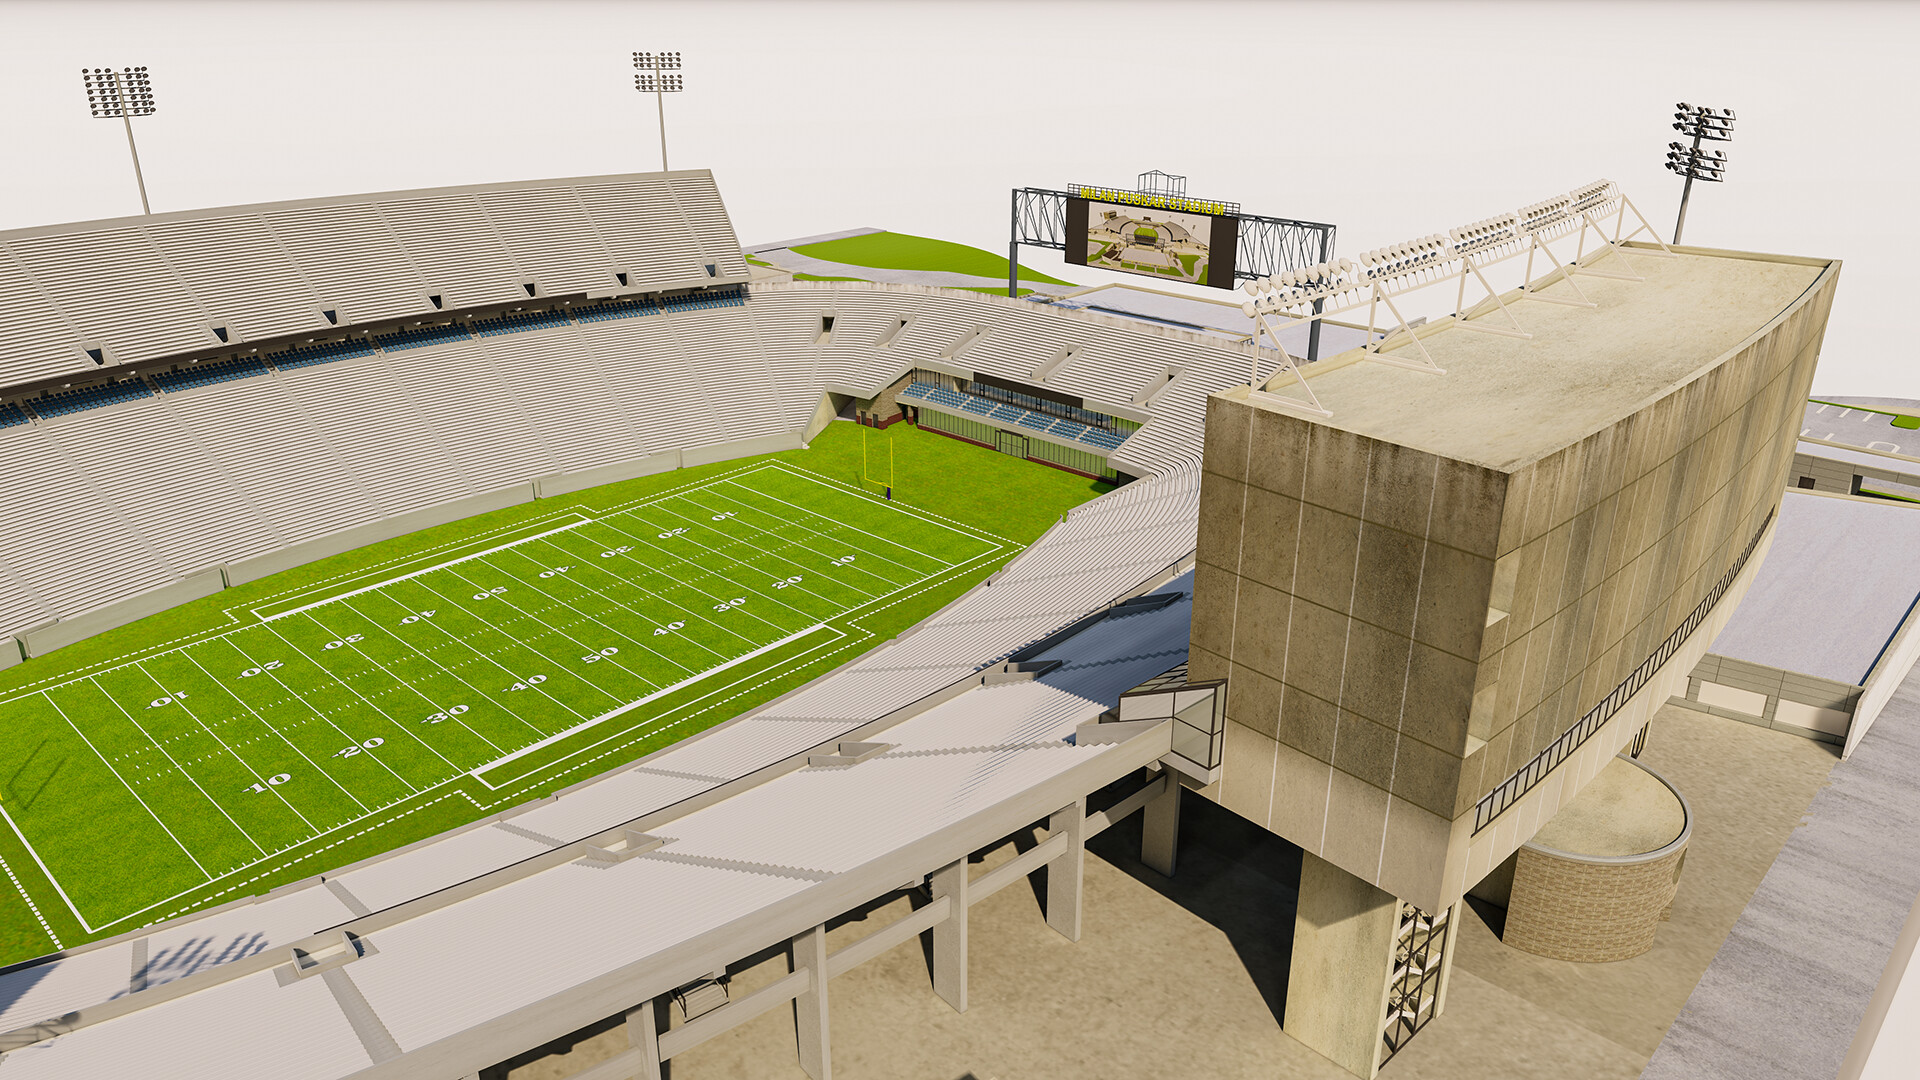 ArtStation - Bridgestone Arena Nashville USA 3D Model